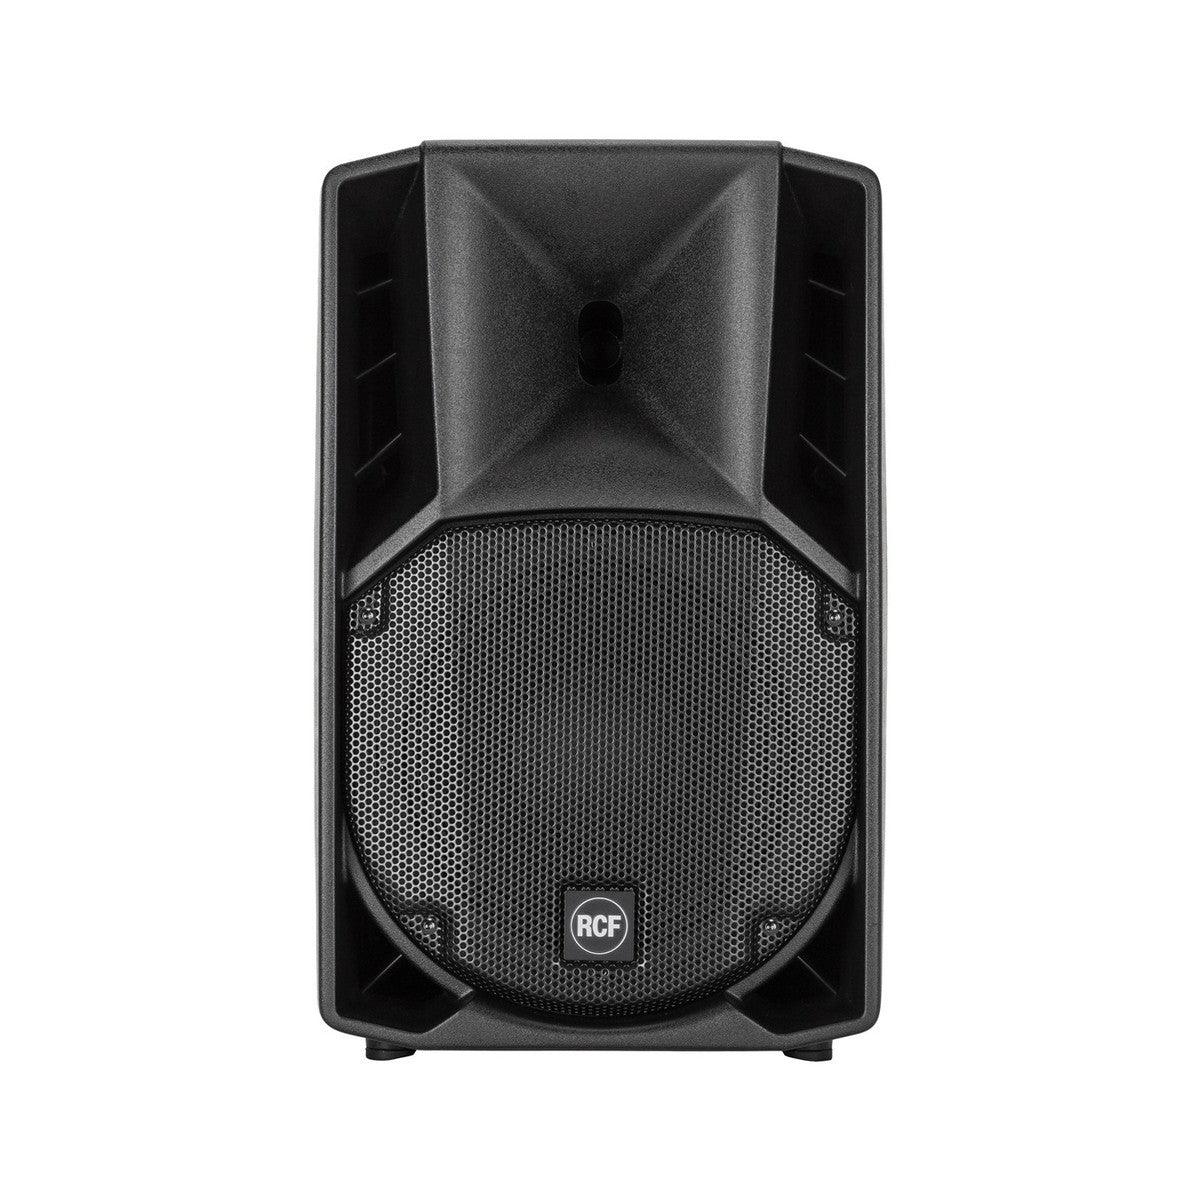 RCF ART 708-A MK4 Active Speaker - DY Pro Audio